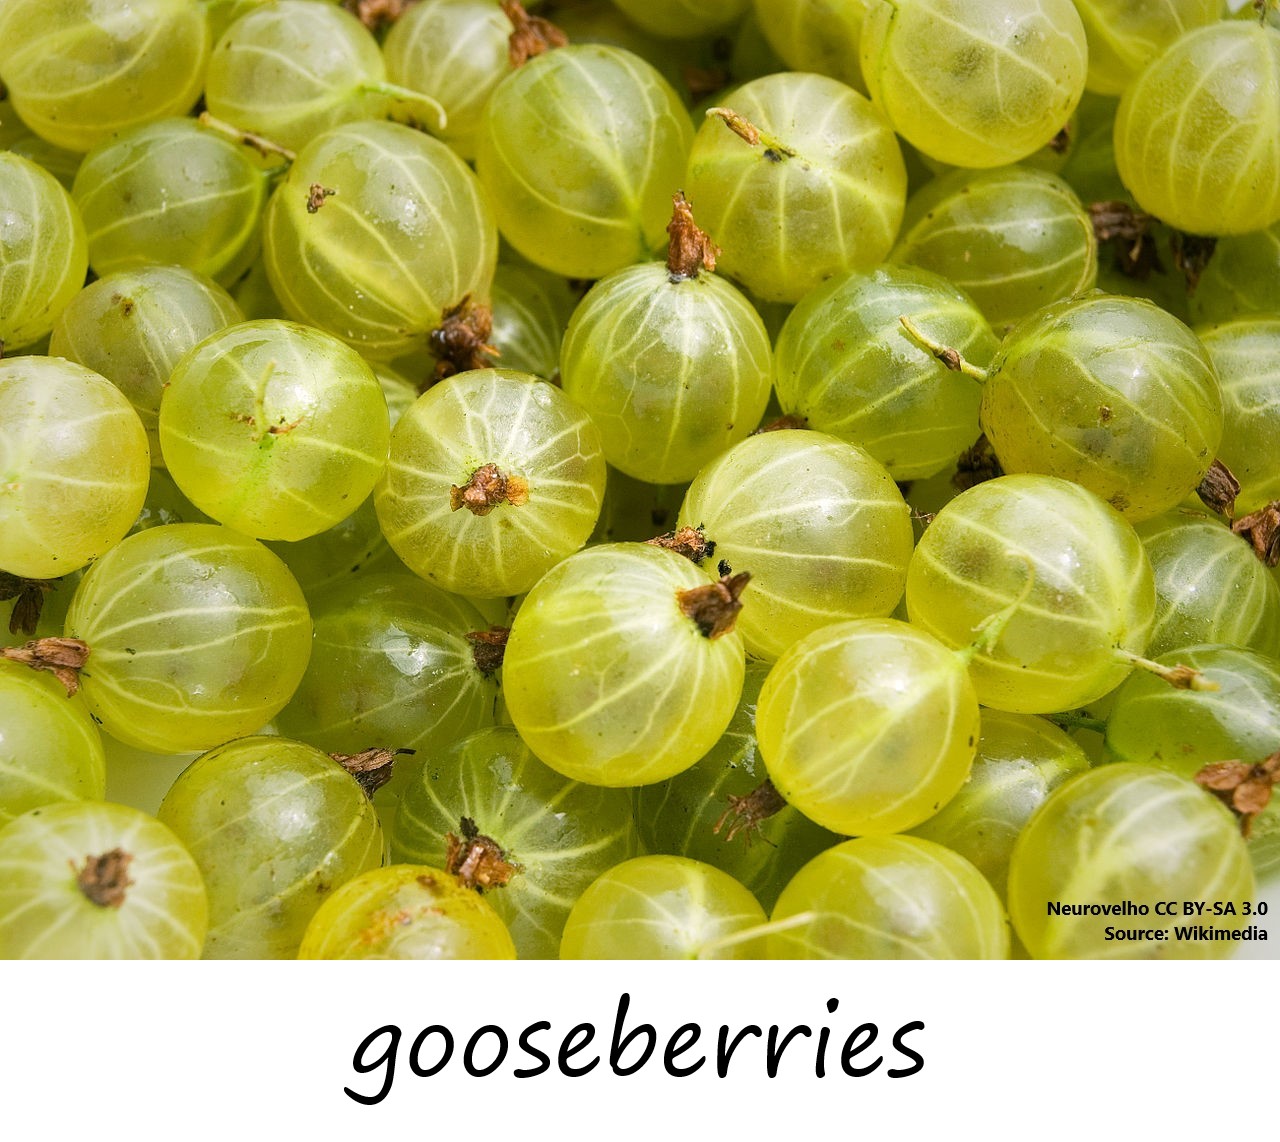 Gooseberry photo with label